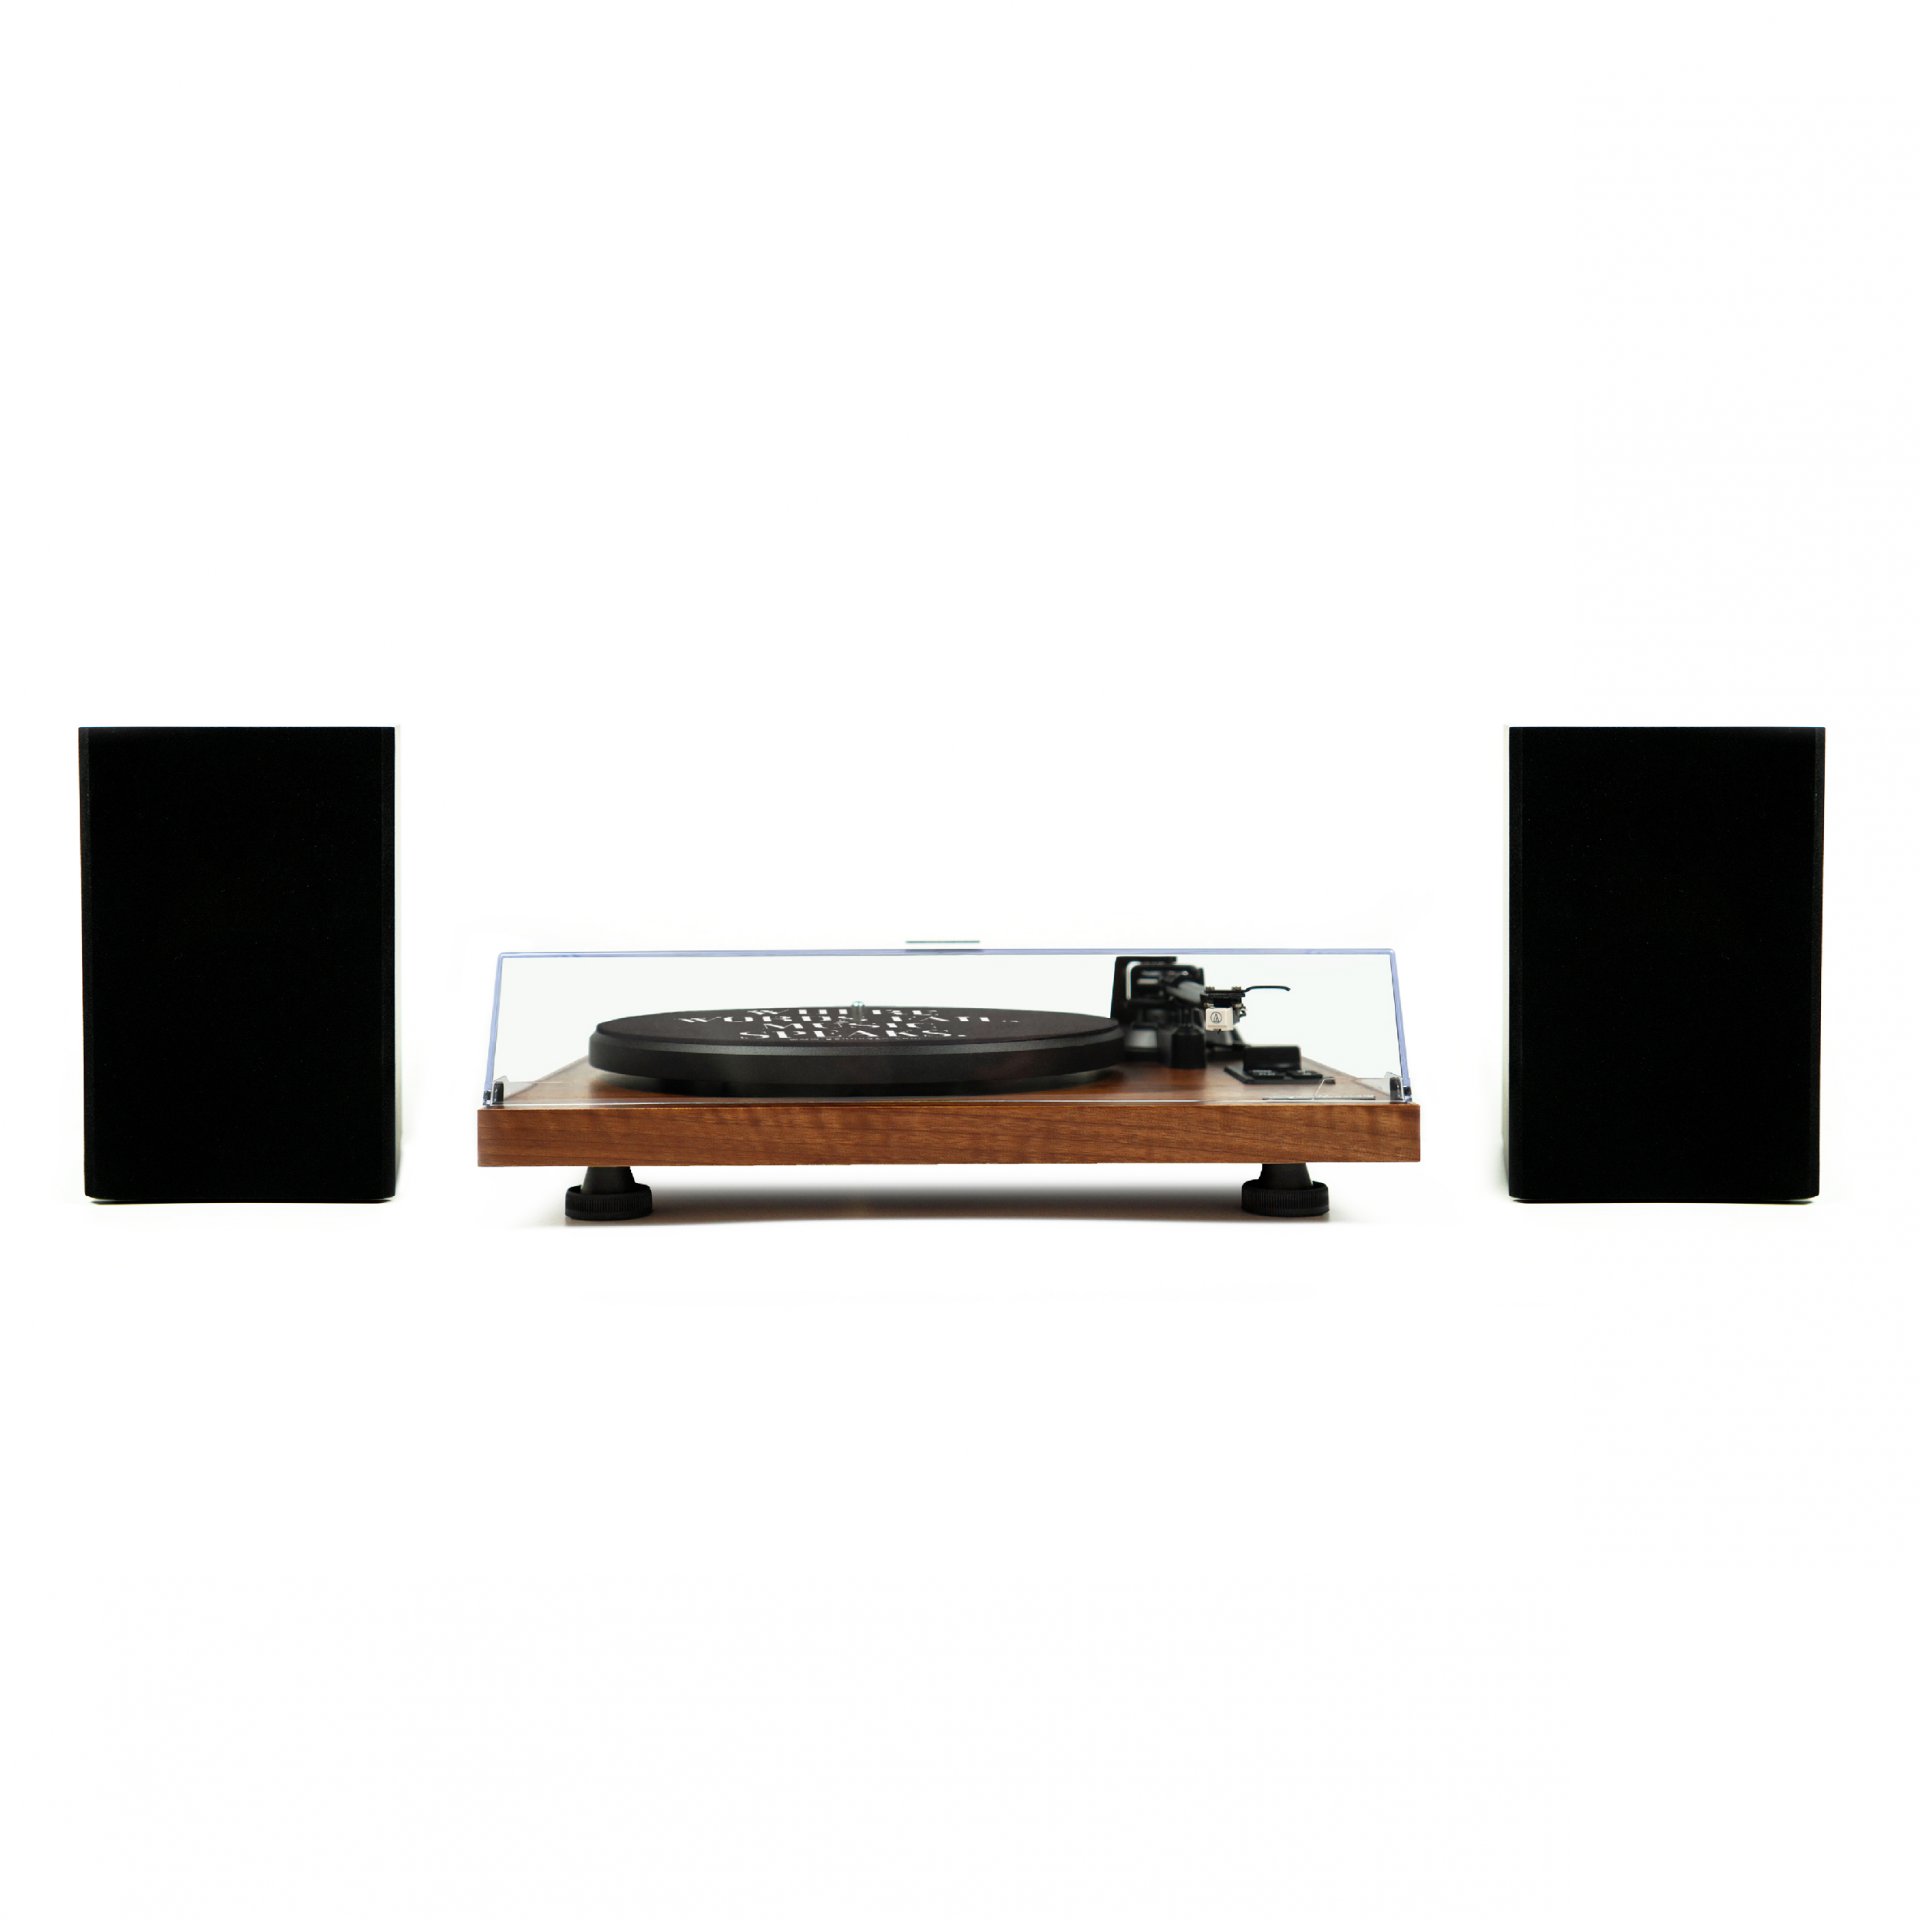 Gadhouse Henry Hi-fi Turntable With Bookshelf Speaker เครื่องเล่นแผ่นเสียงพร้อมลำโพง